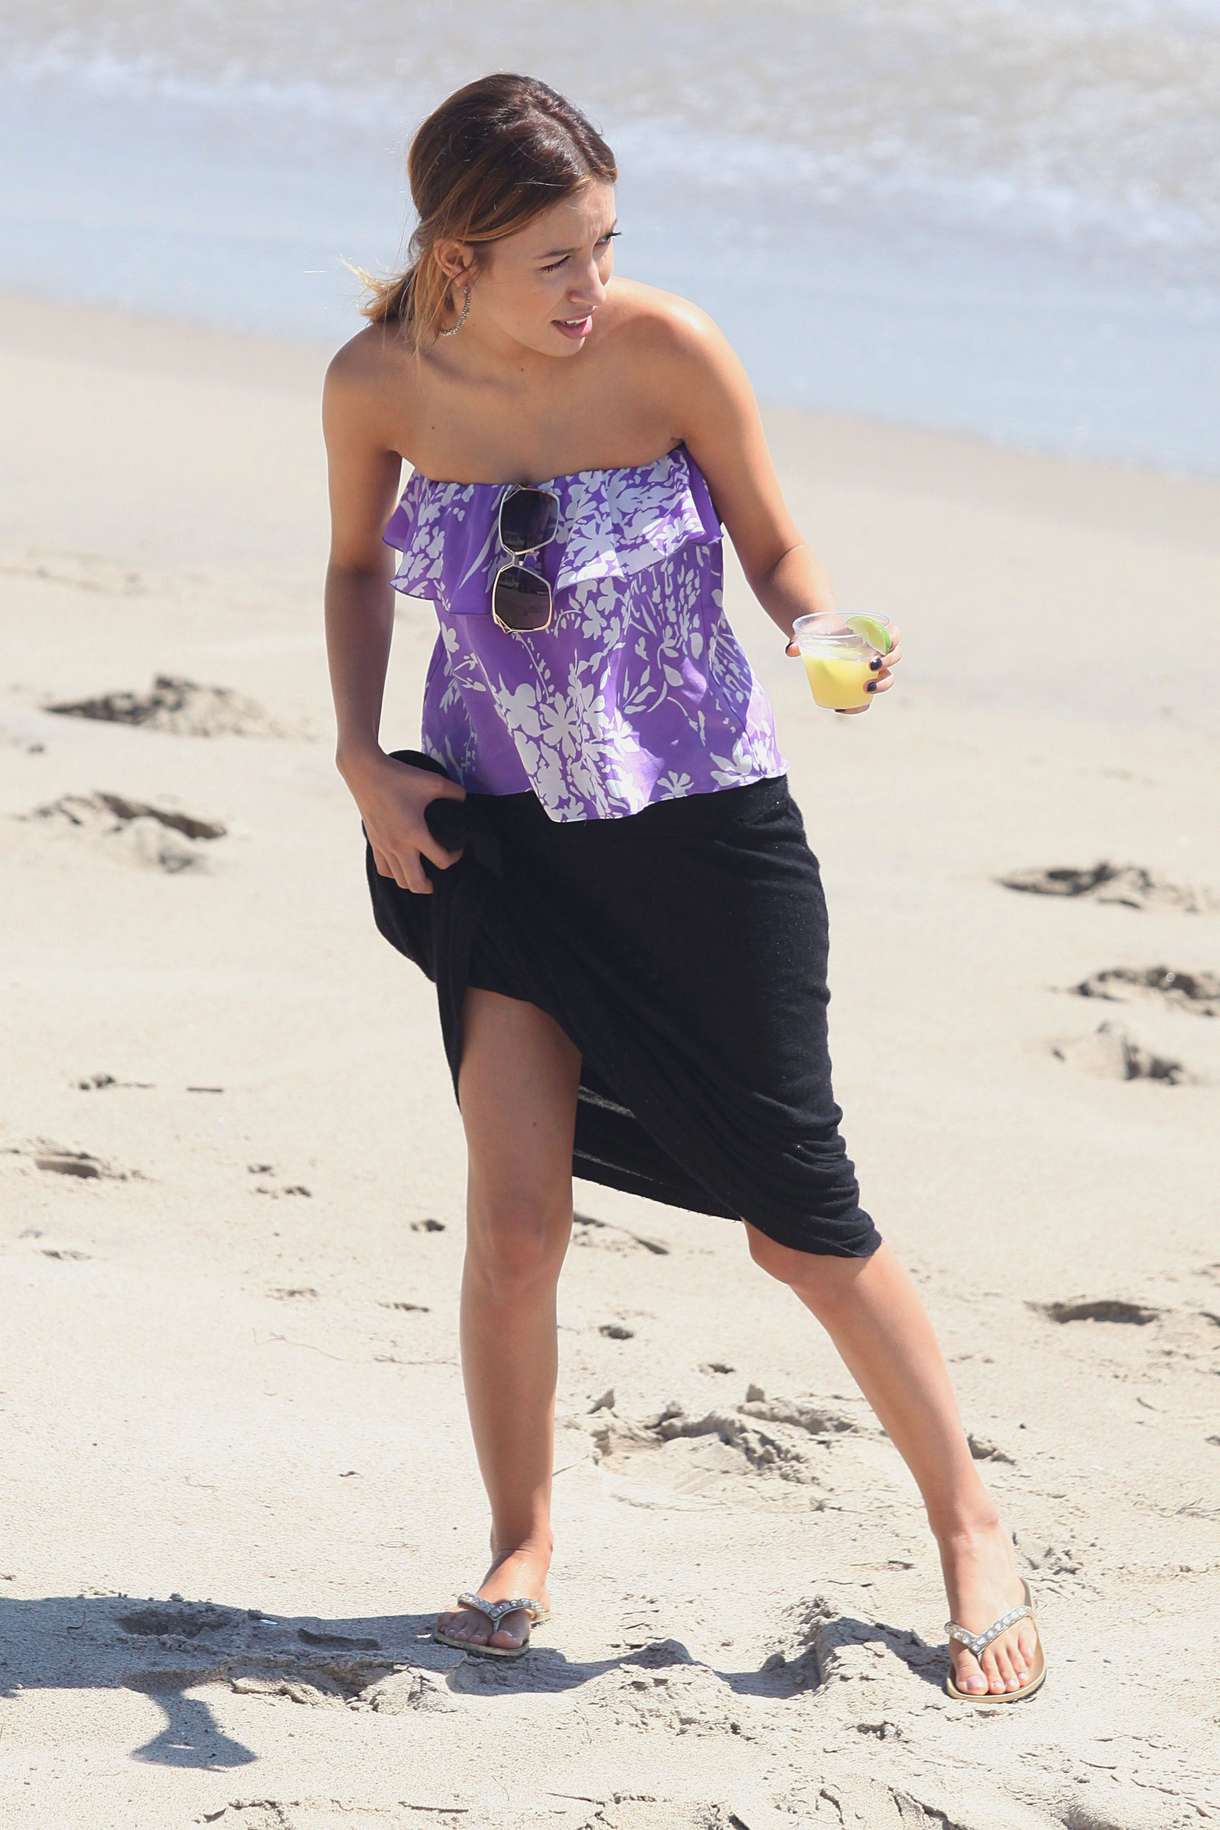 Christian Serratos - Bikini At The Beach In Malibu. 